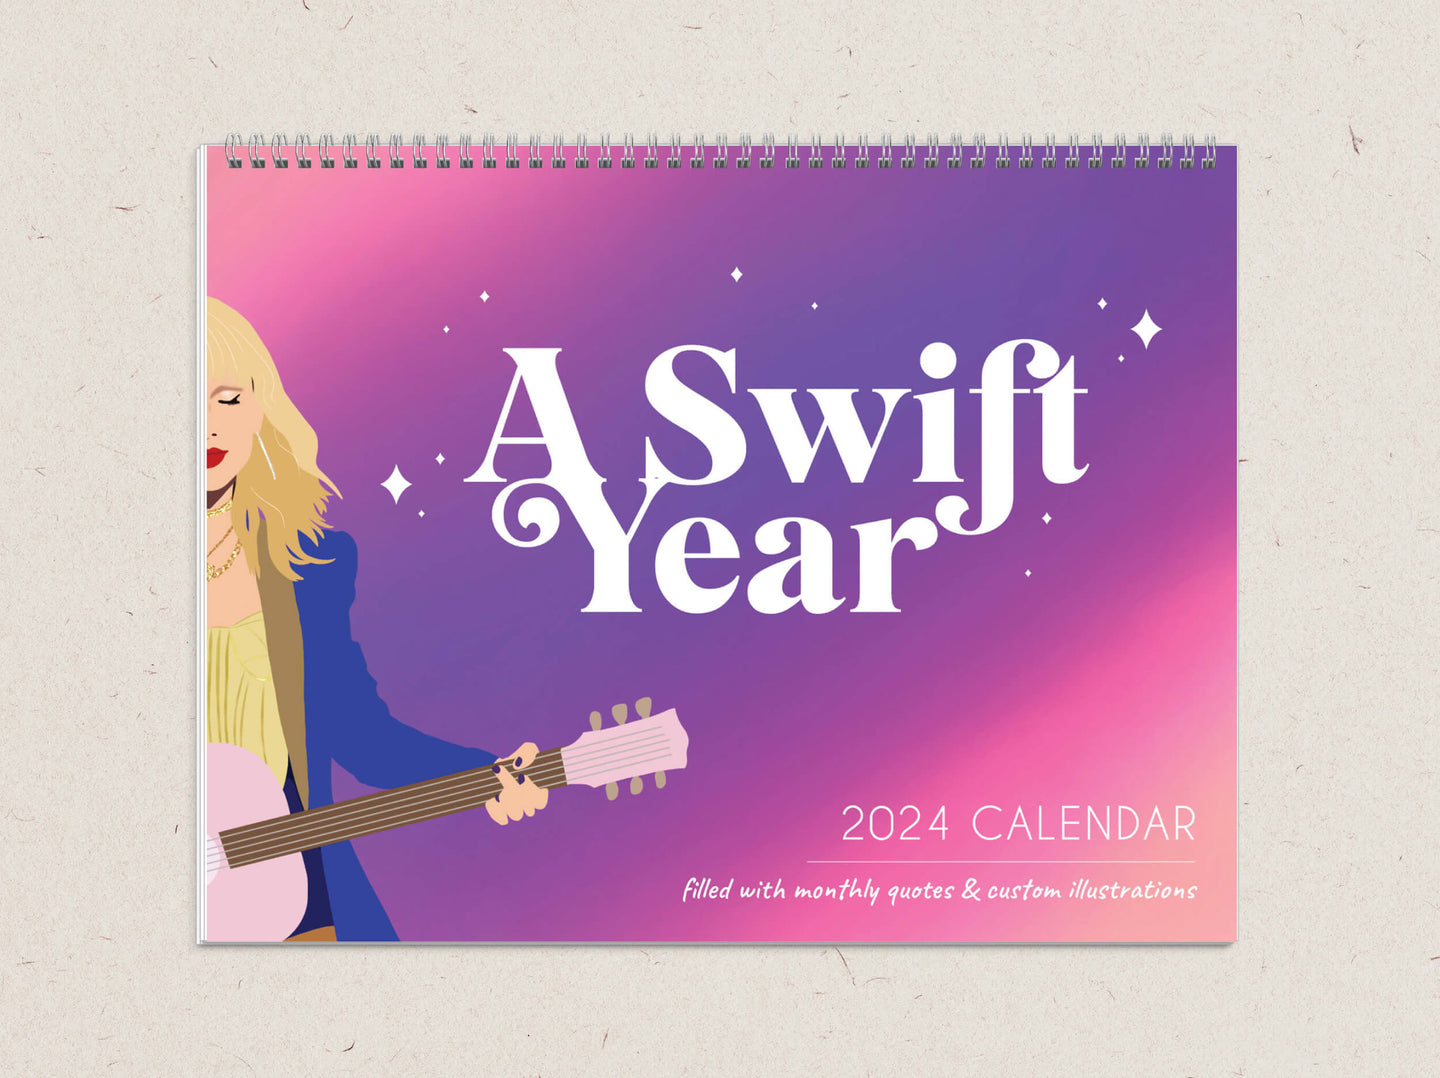 A Swift Year 2024 Calendar